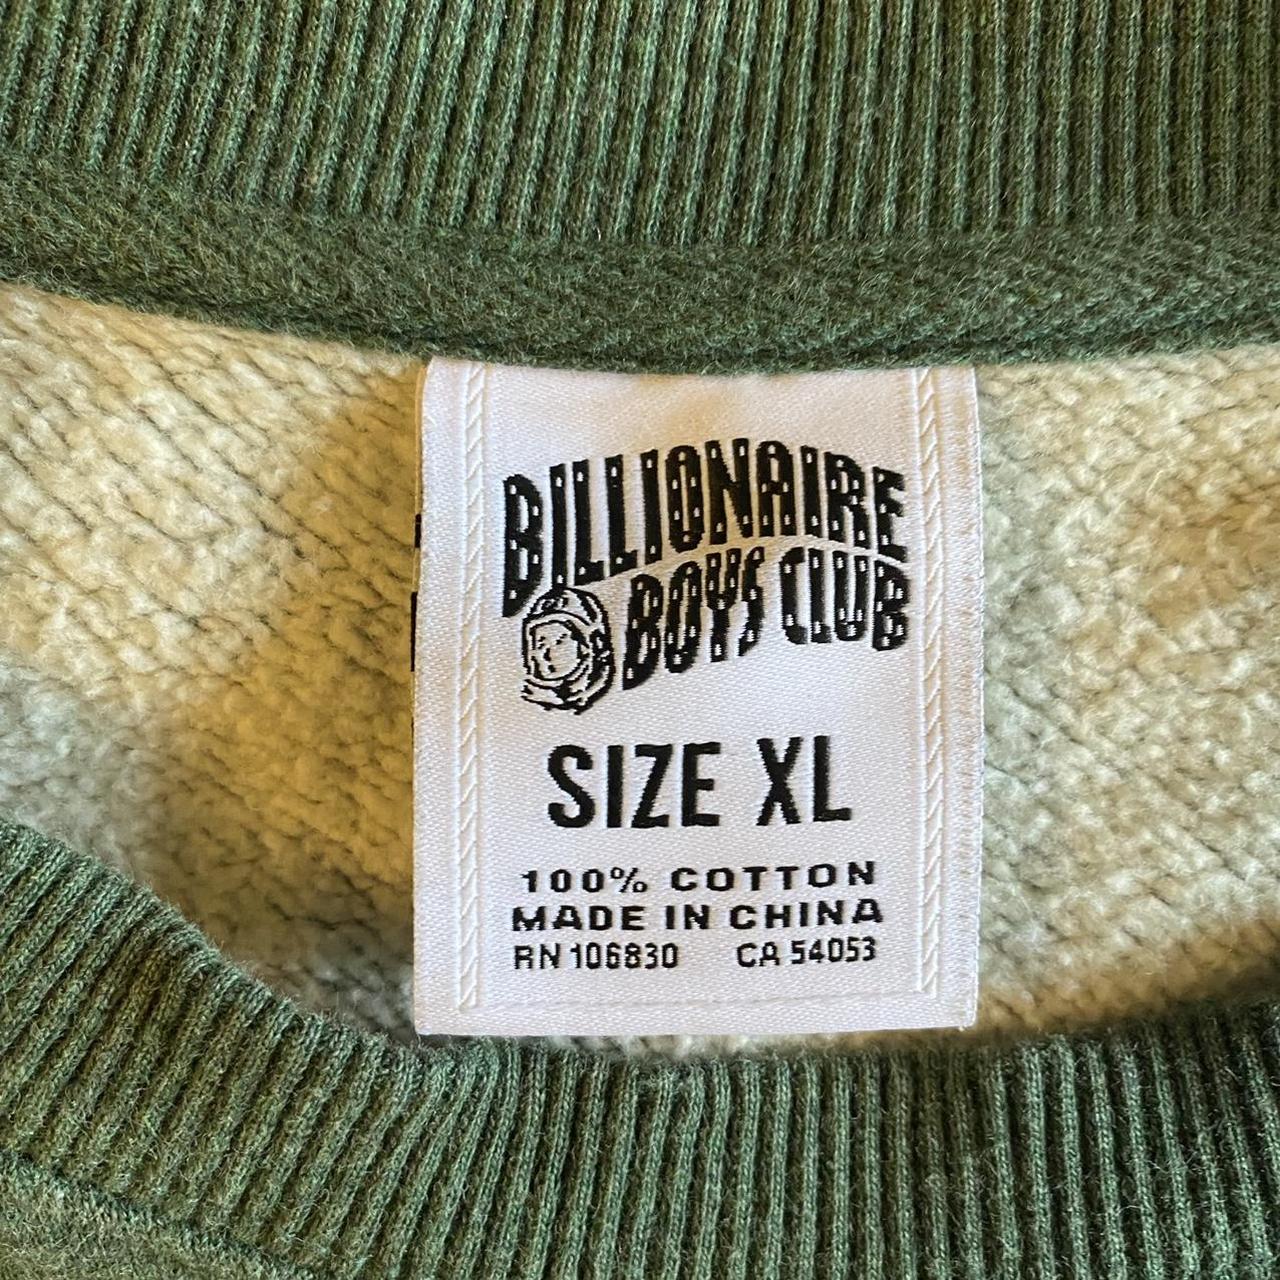 Product Image 4 - Billionaire Boys Club Sweatshirt. Dope